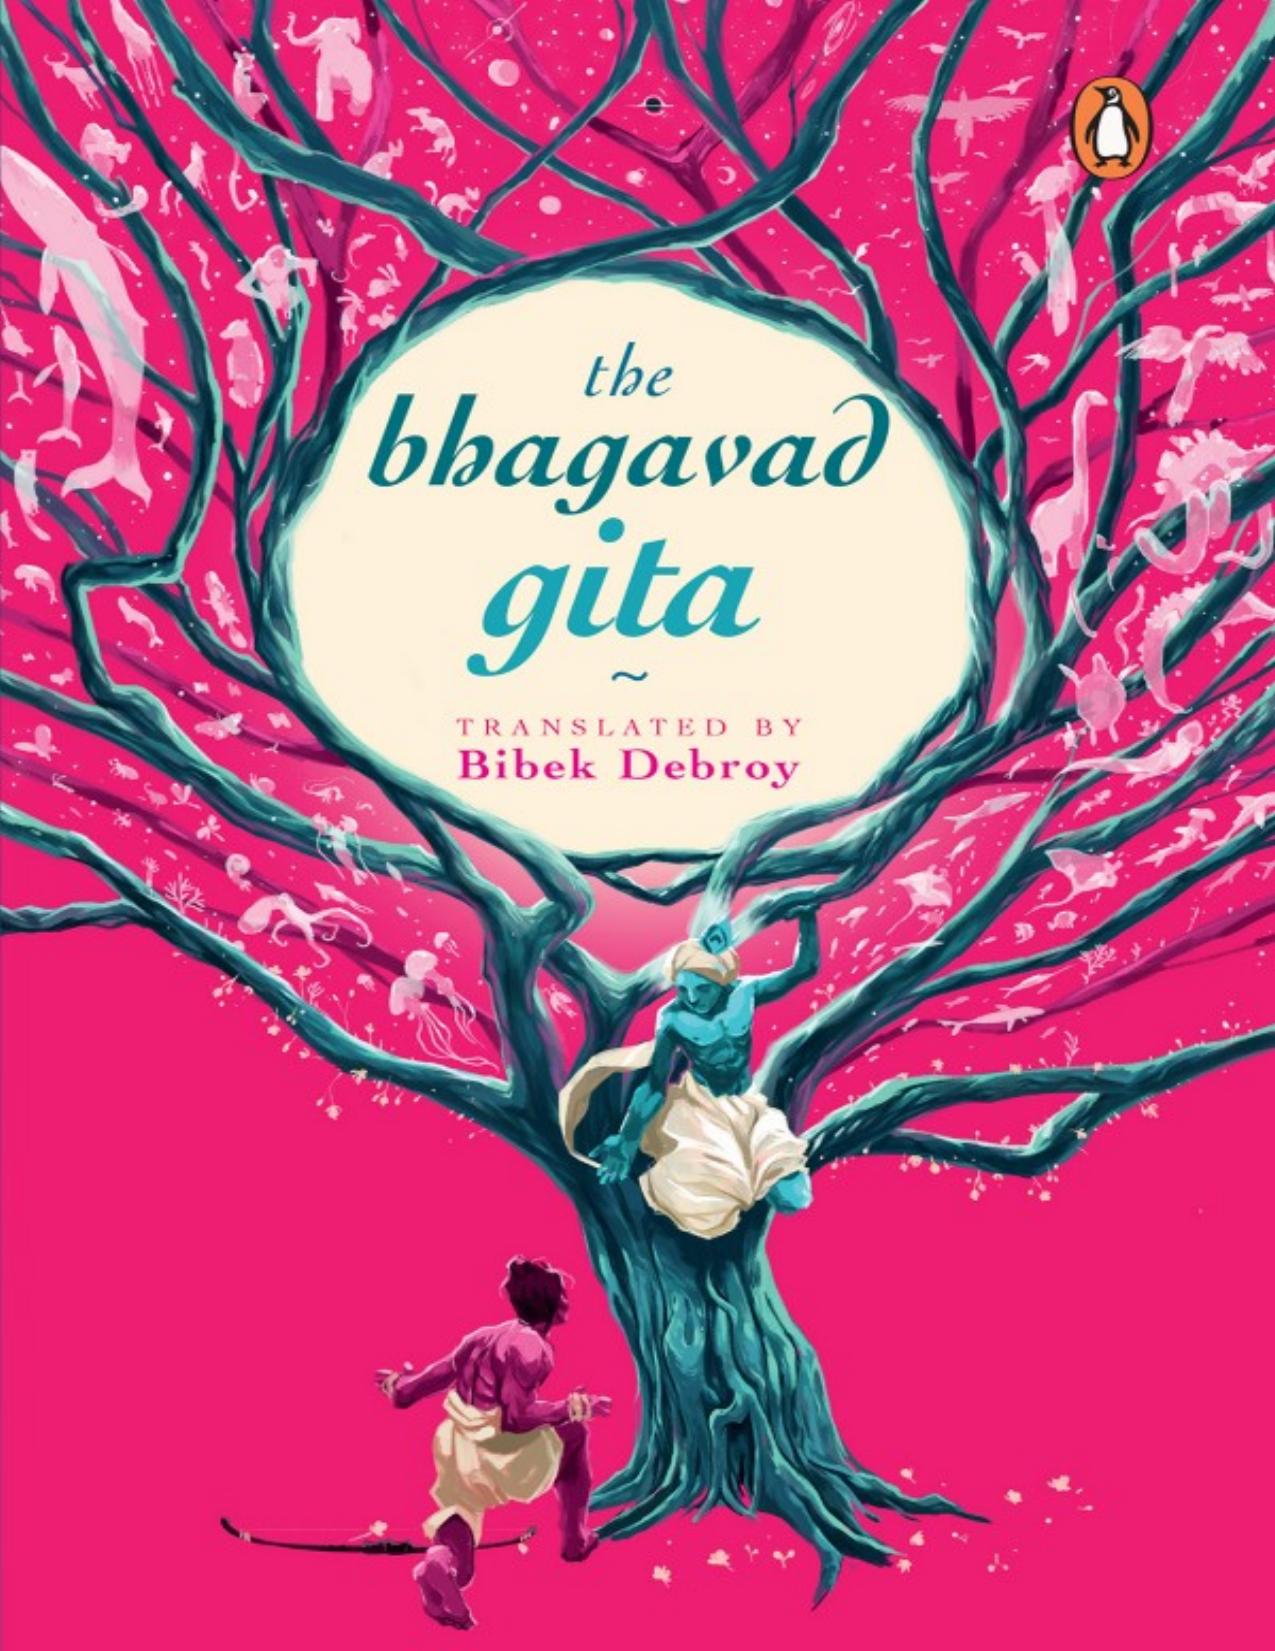 The Bhagavad Gita by Bibek Debroy